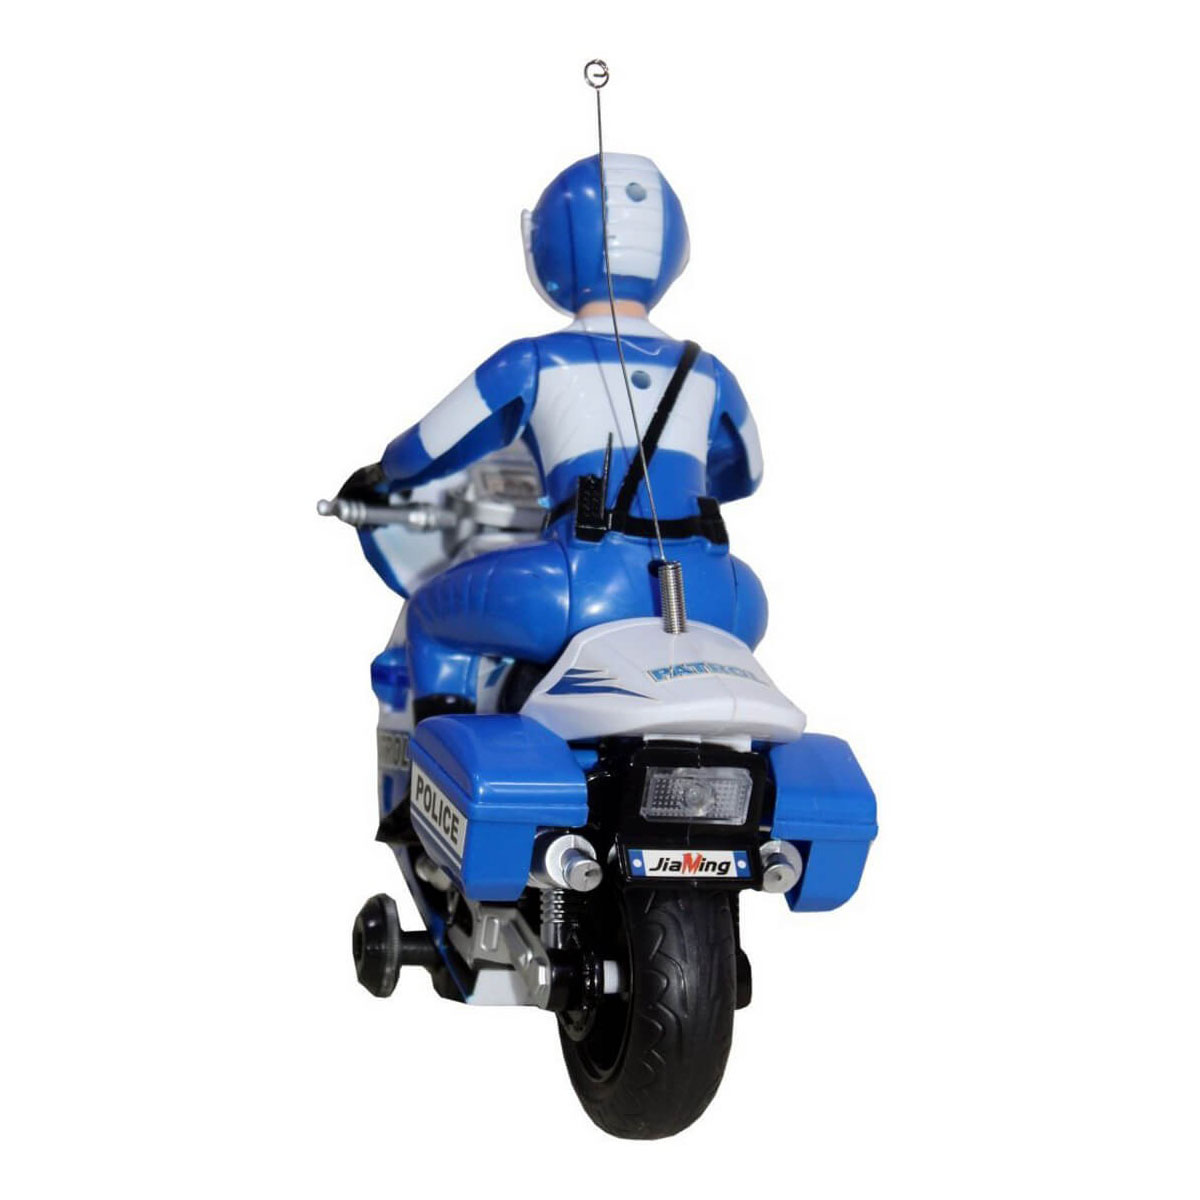 Police Patrol Motorcycle Radio Control Motor Bike for Kids